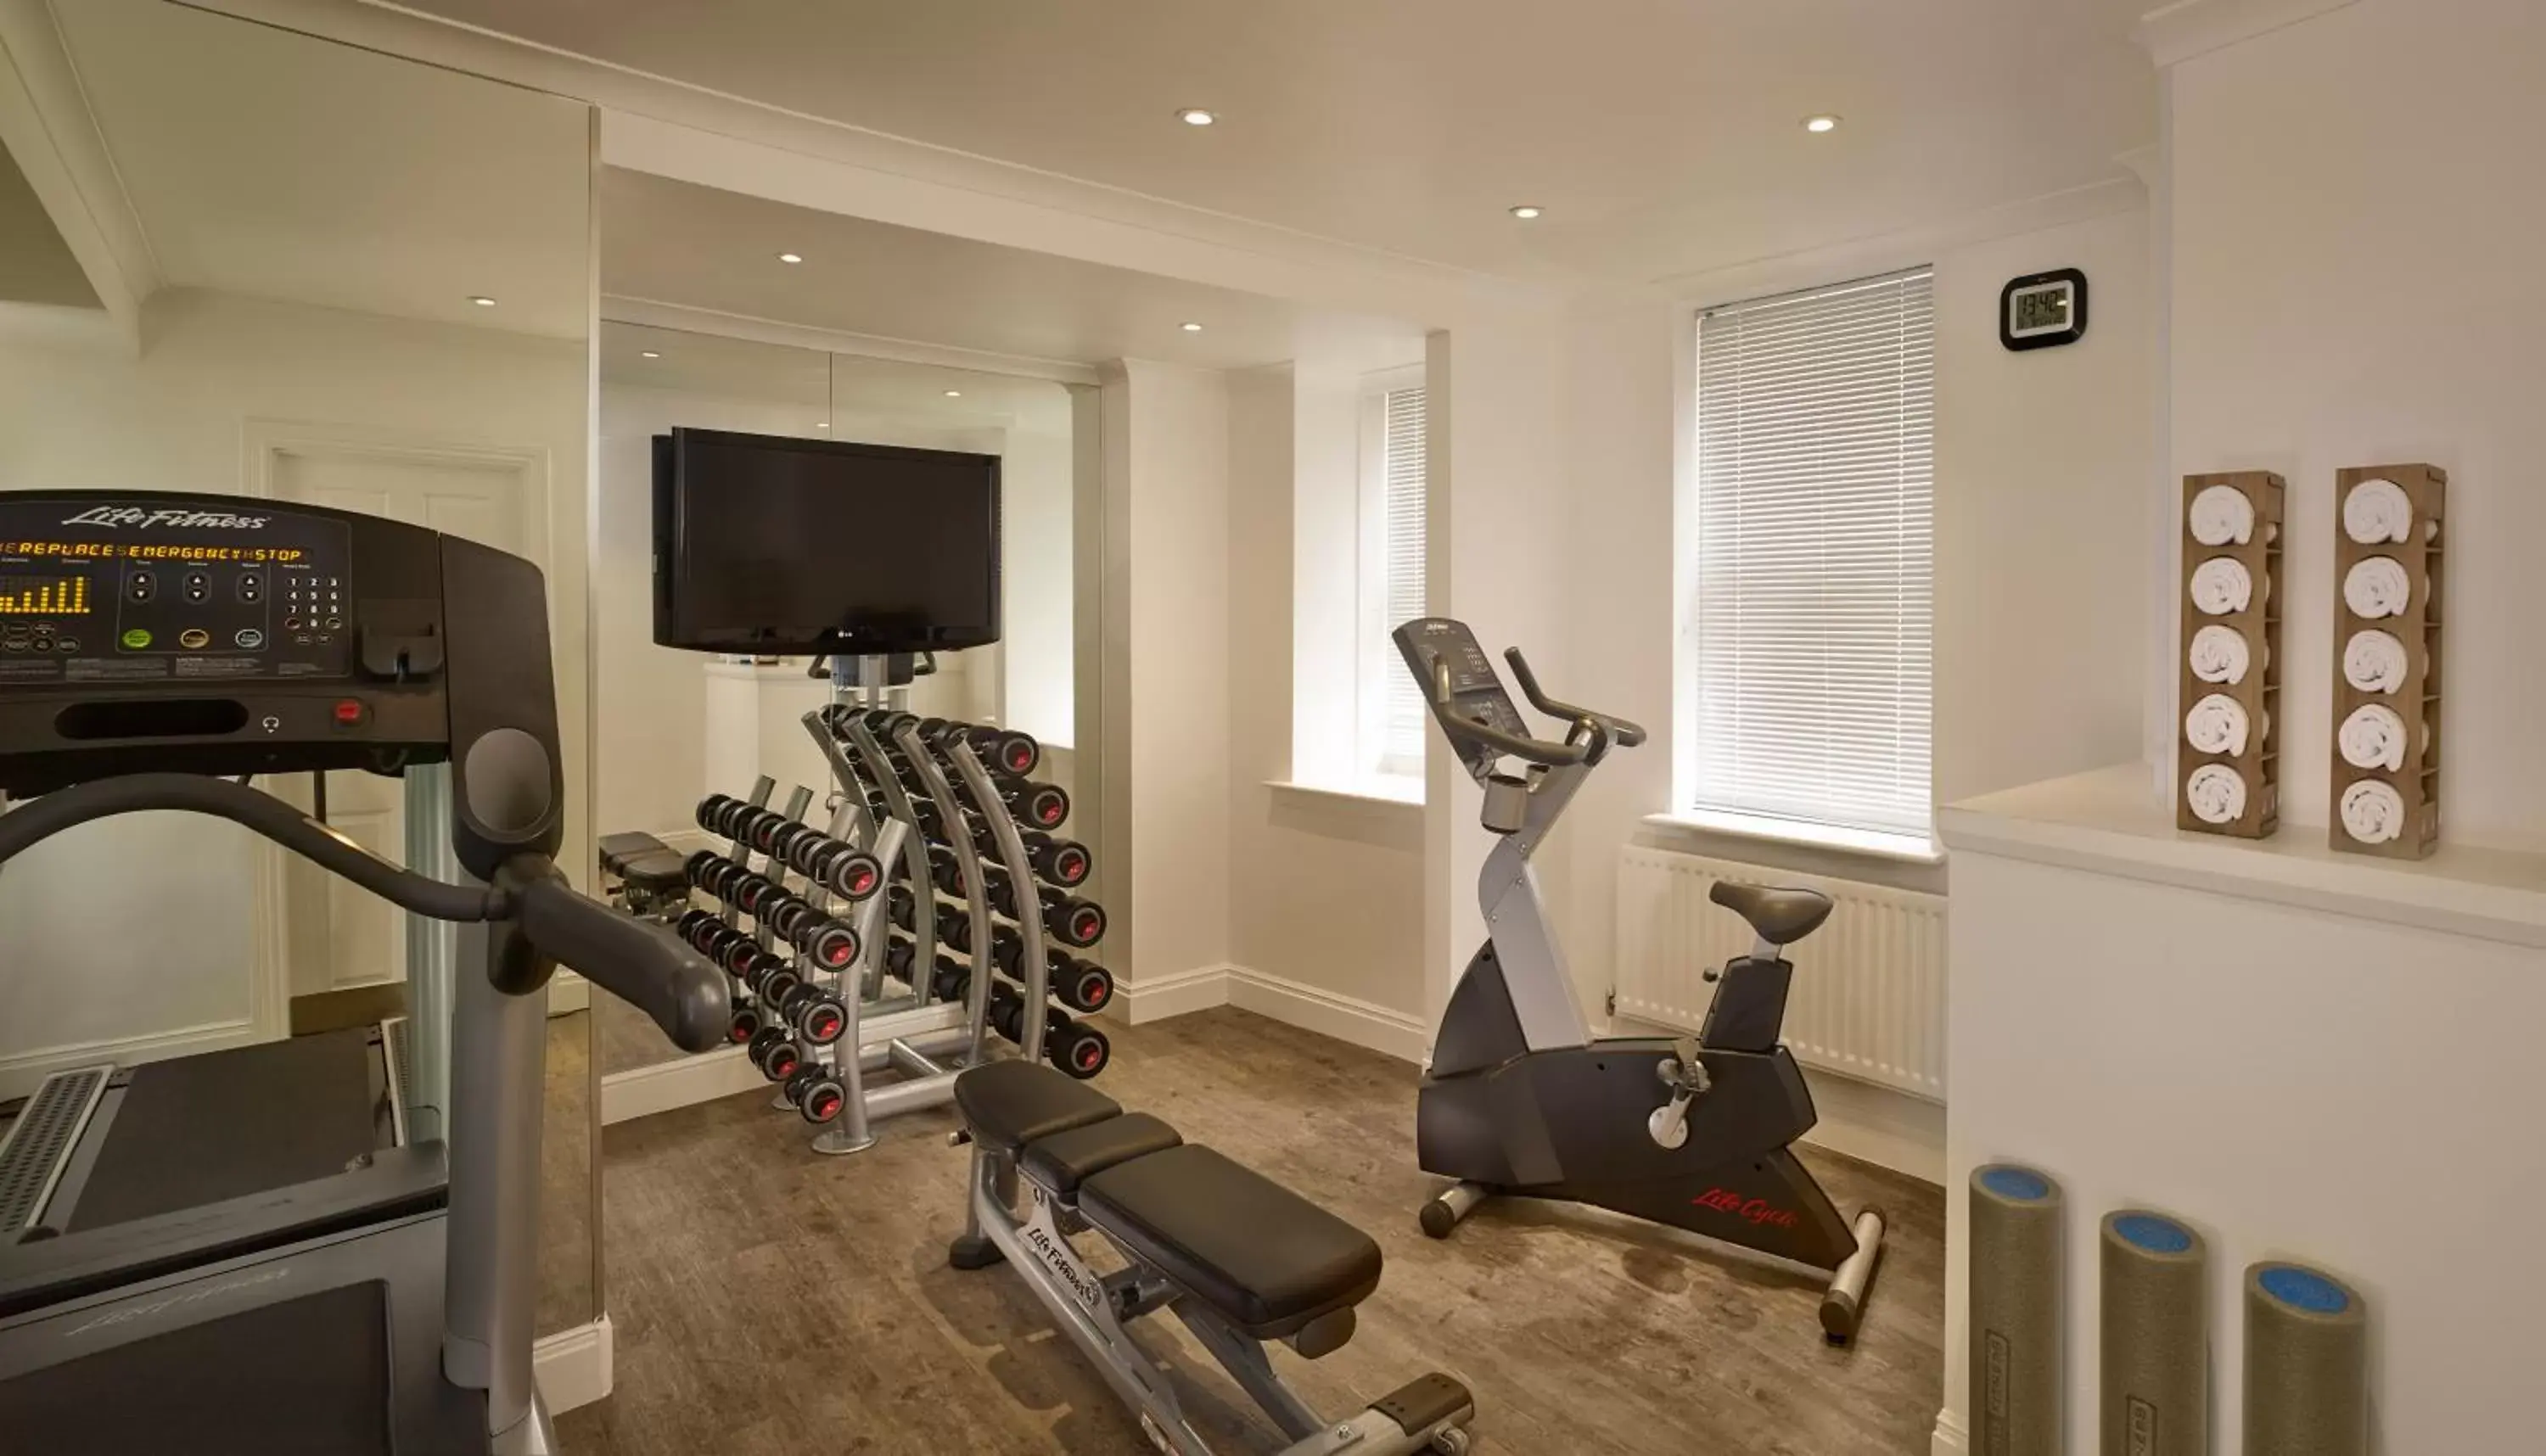 Fitness centre/facilities, Fitness Center/Facilities in Citadines South Kensington London